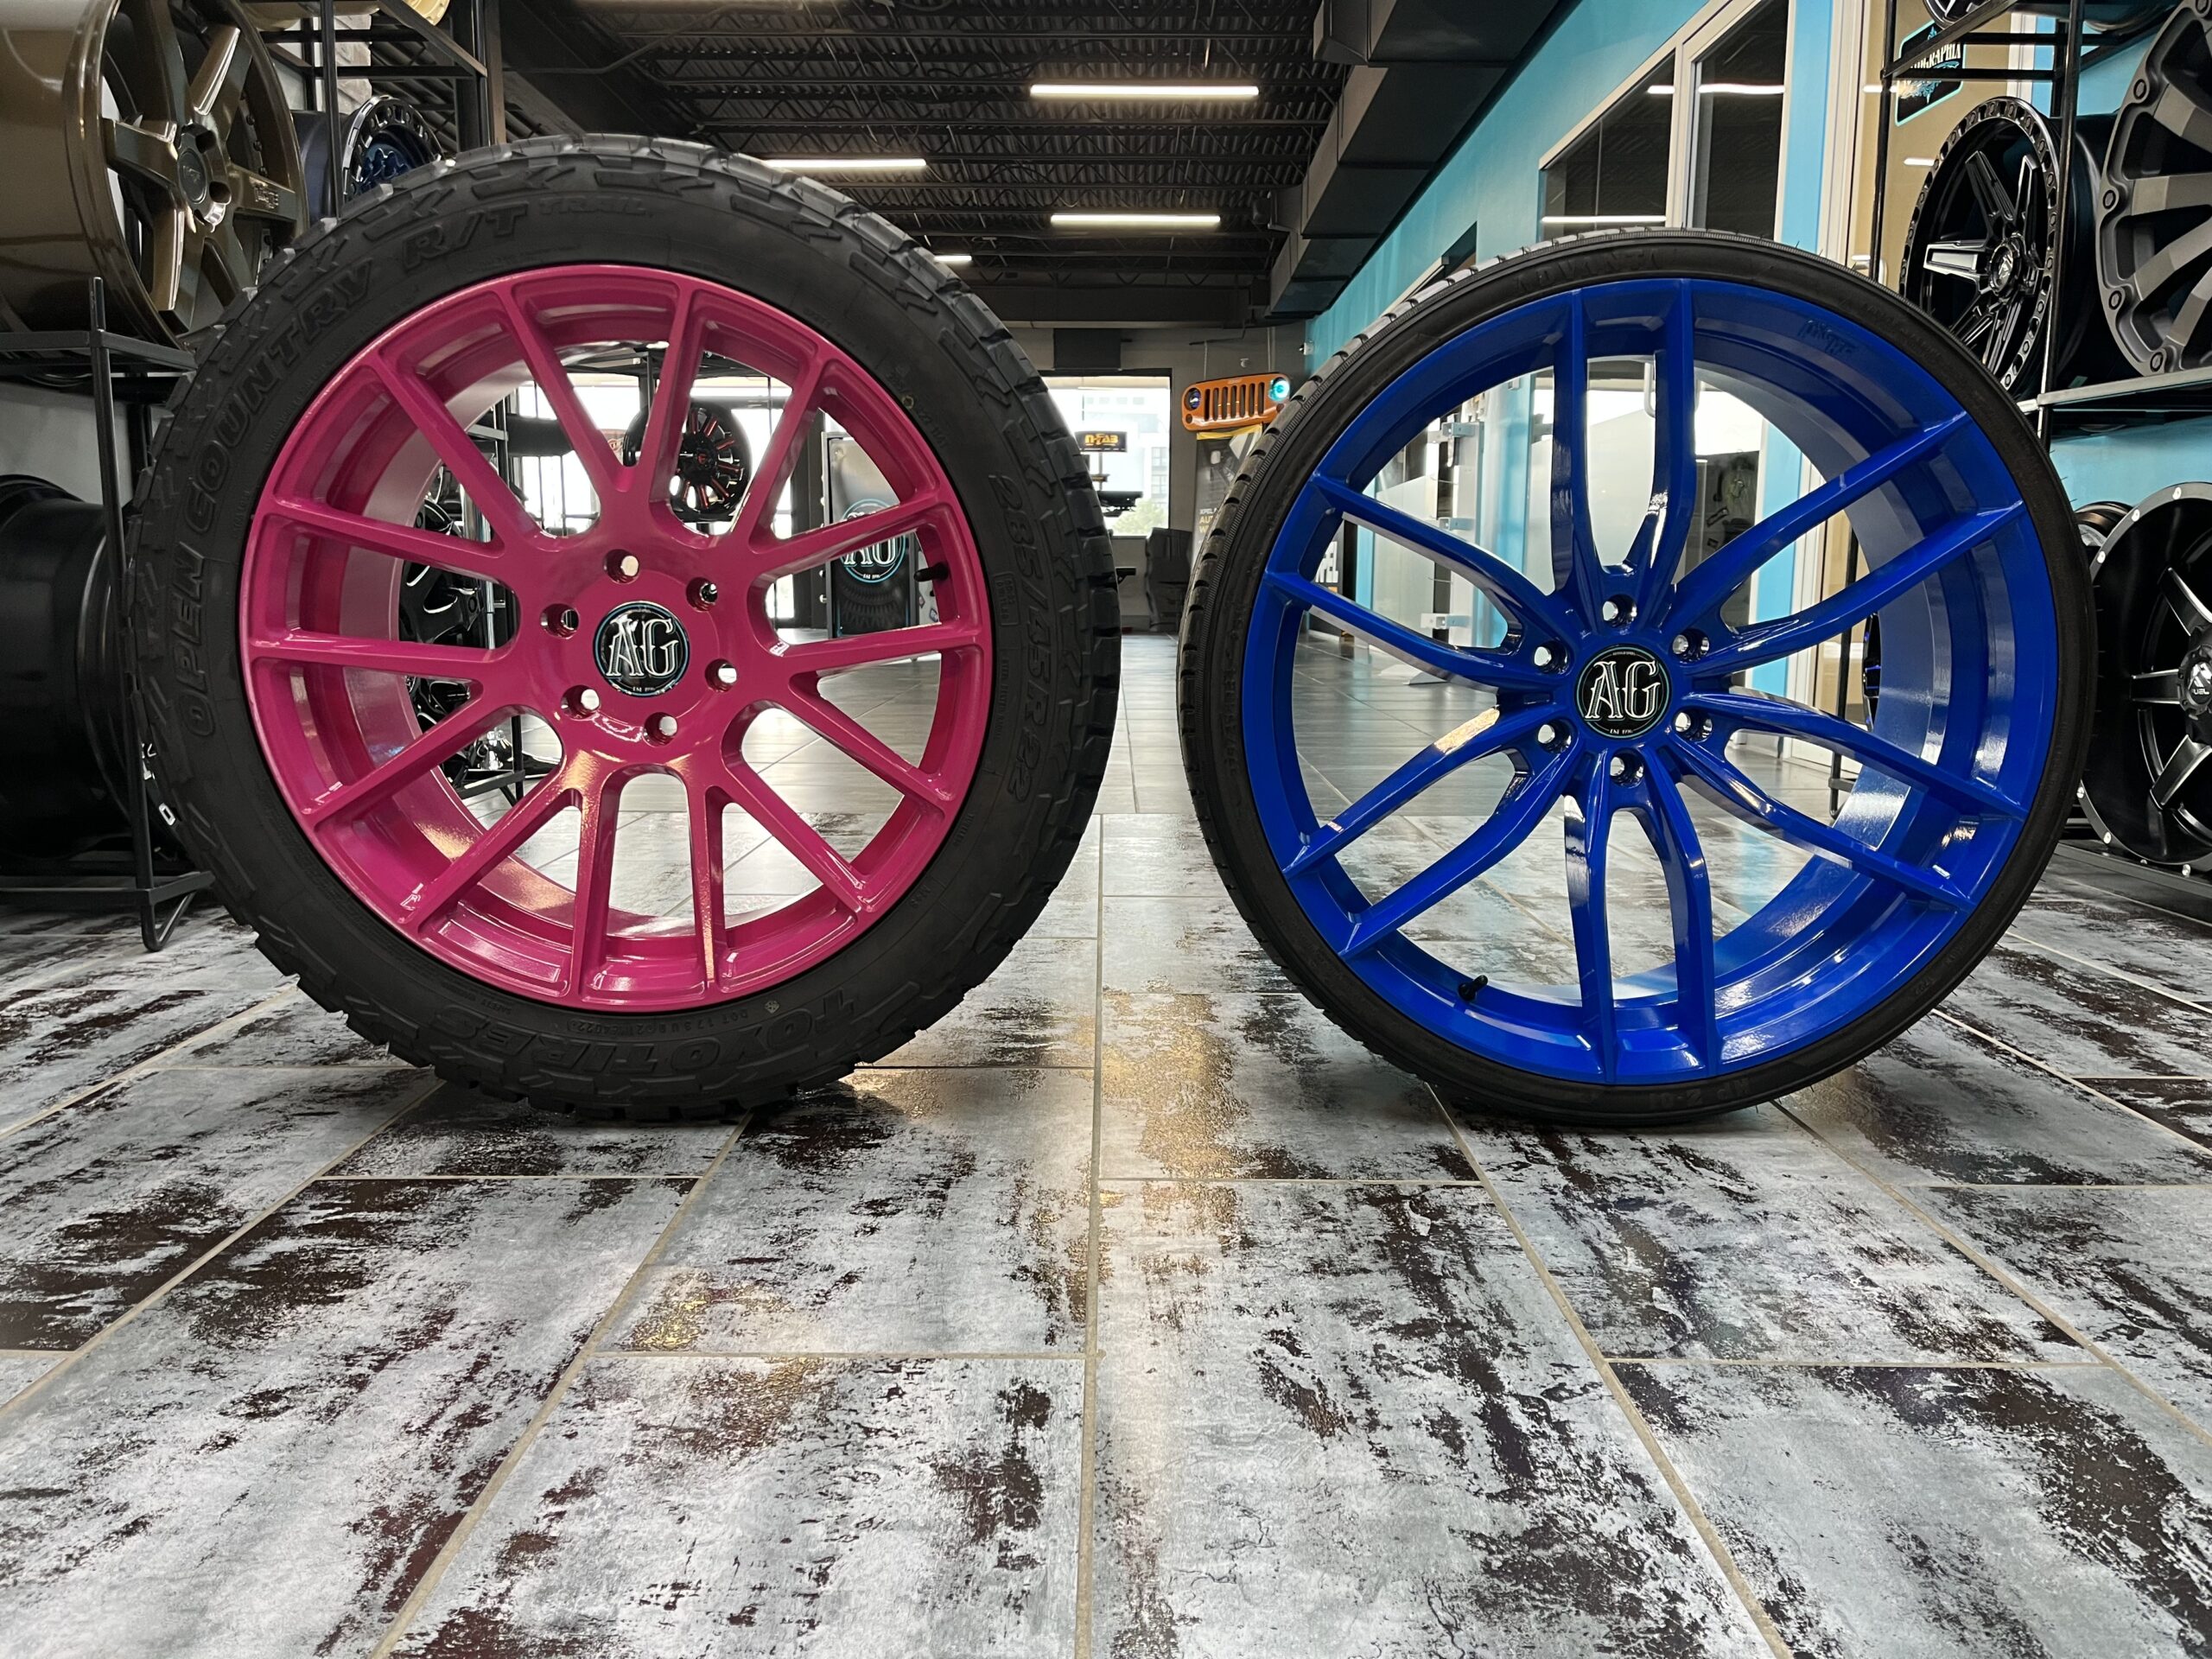 Custom powder coated wheels finished in Omaha, NE by Autographix using powder coating